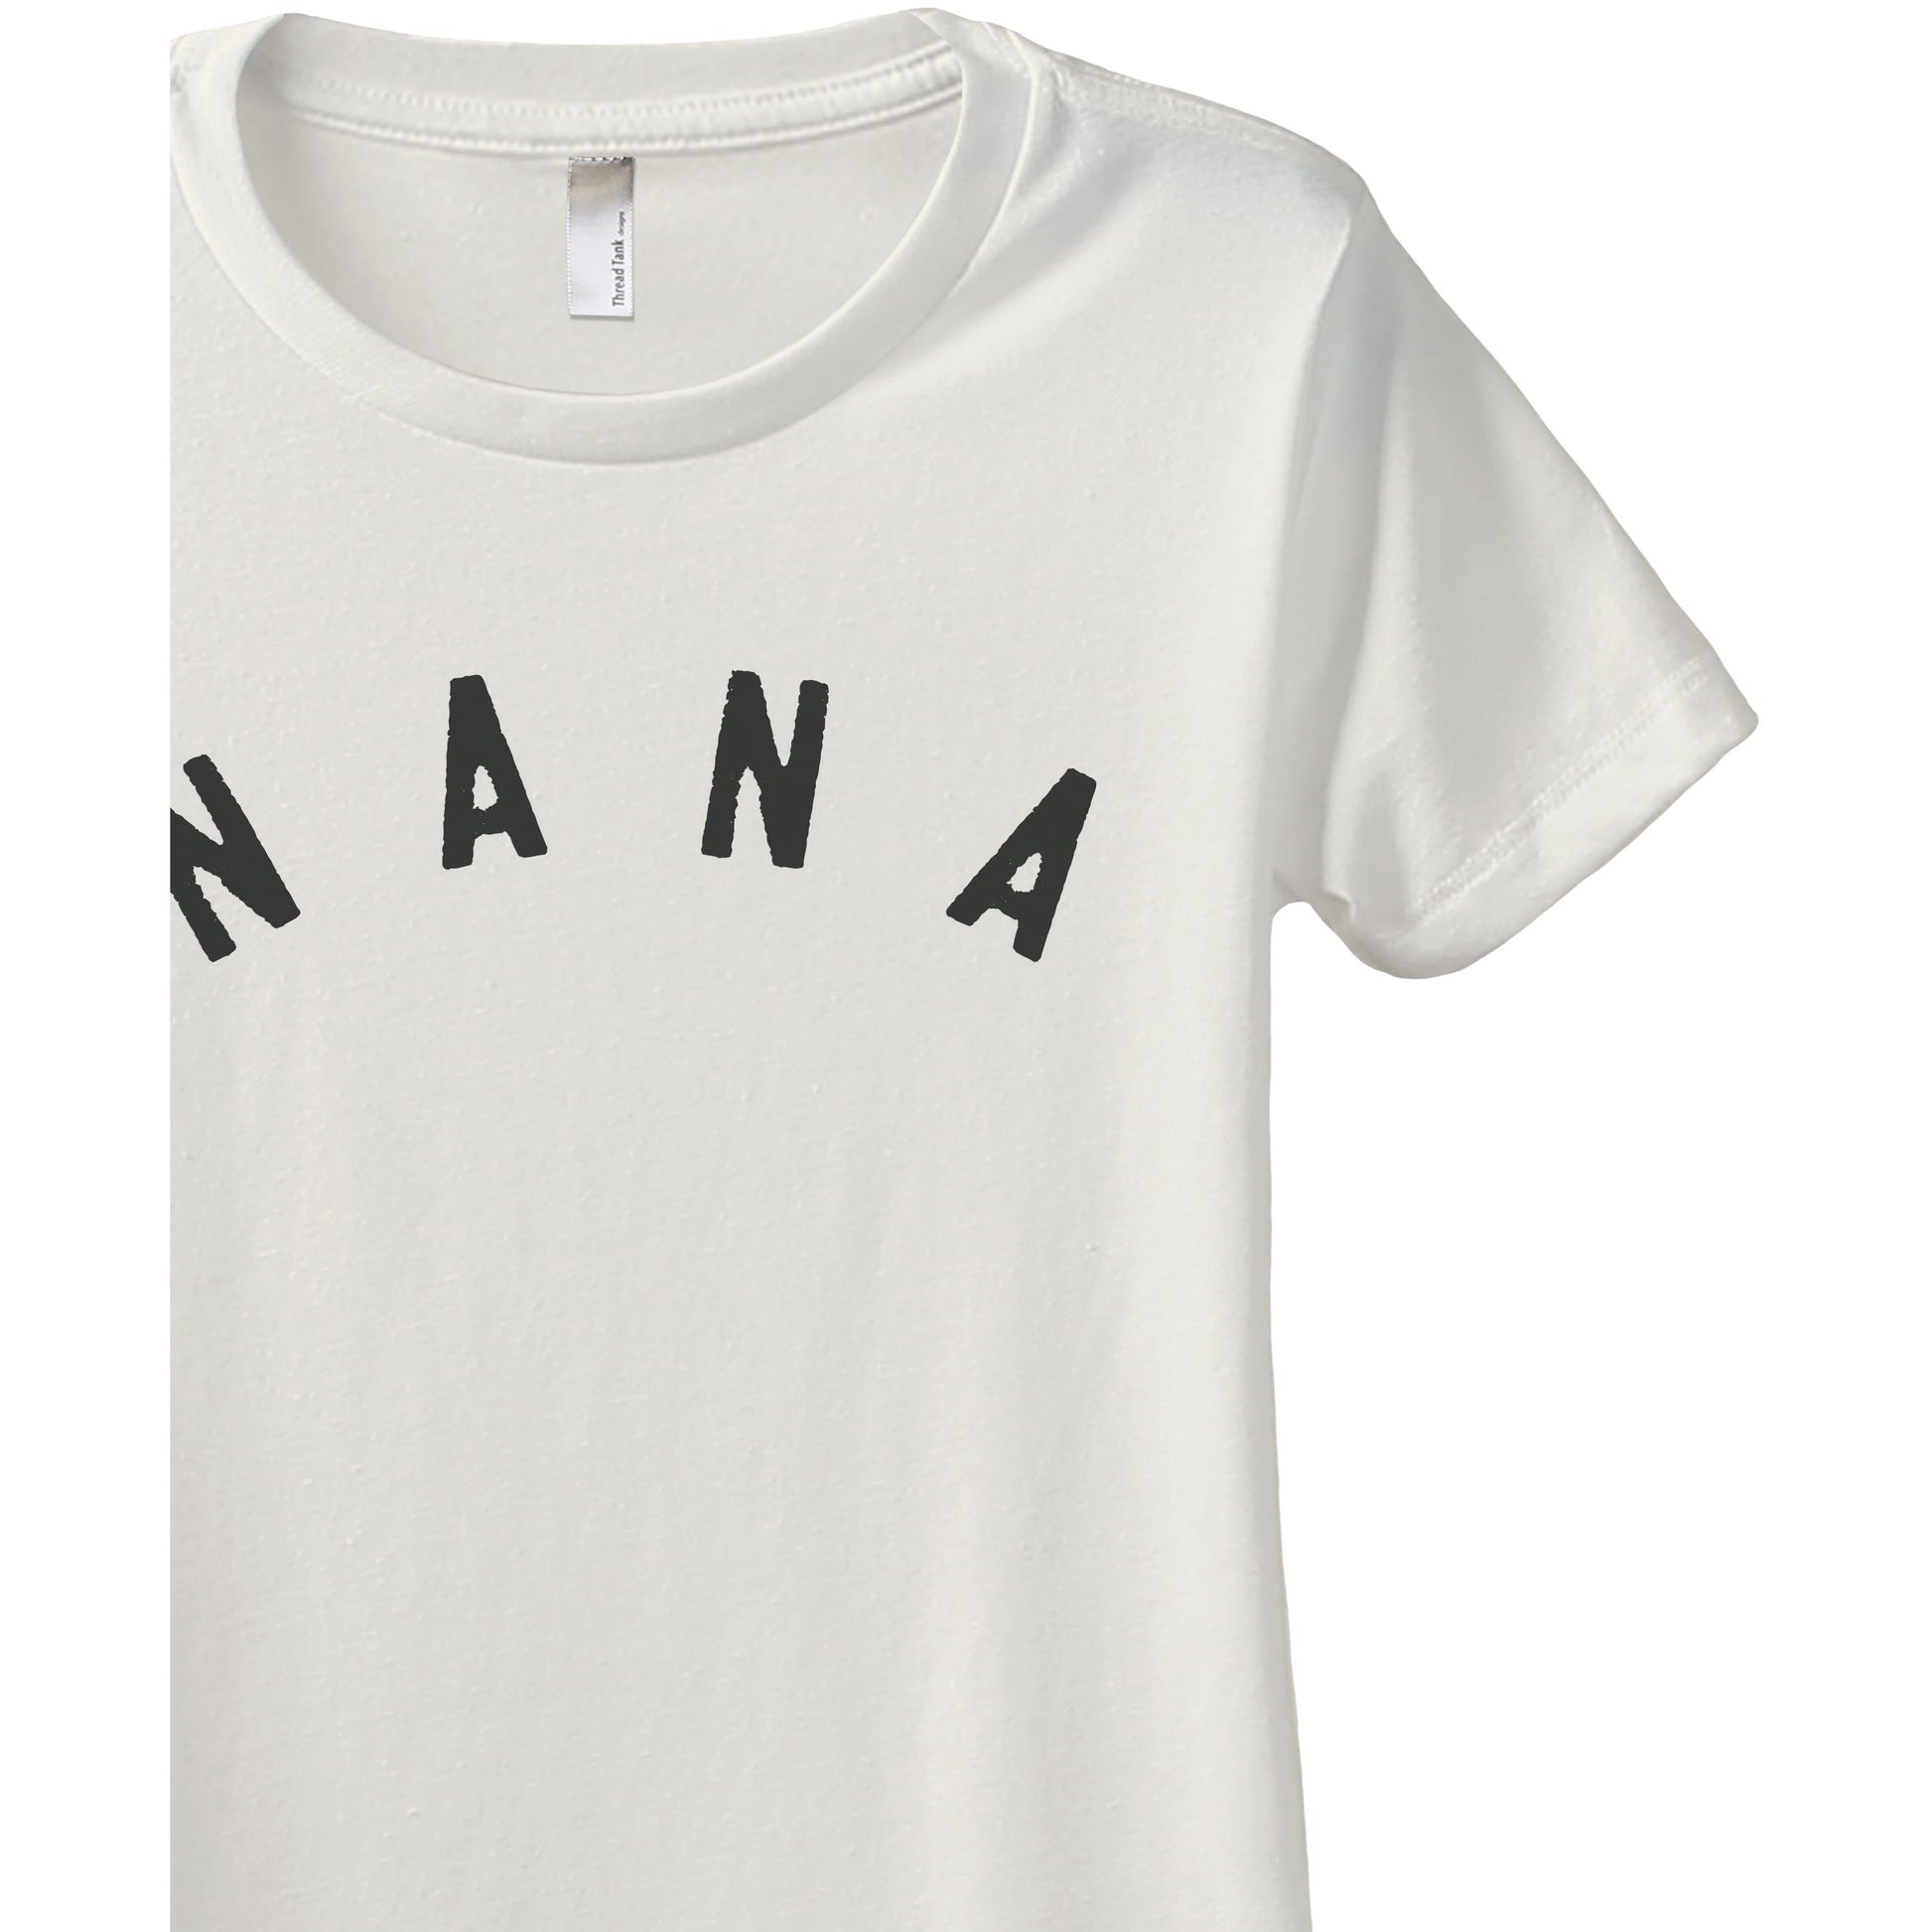 Simply Nana - Stories You Can Wear